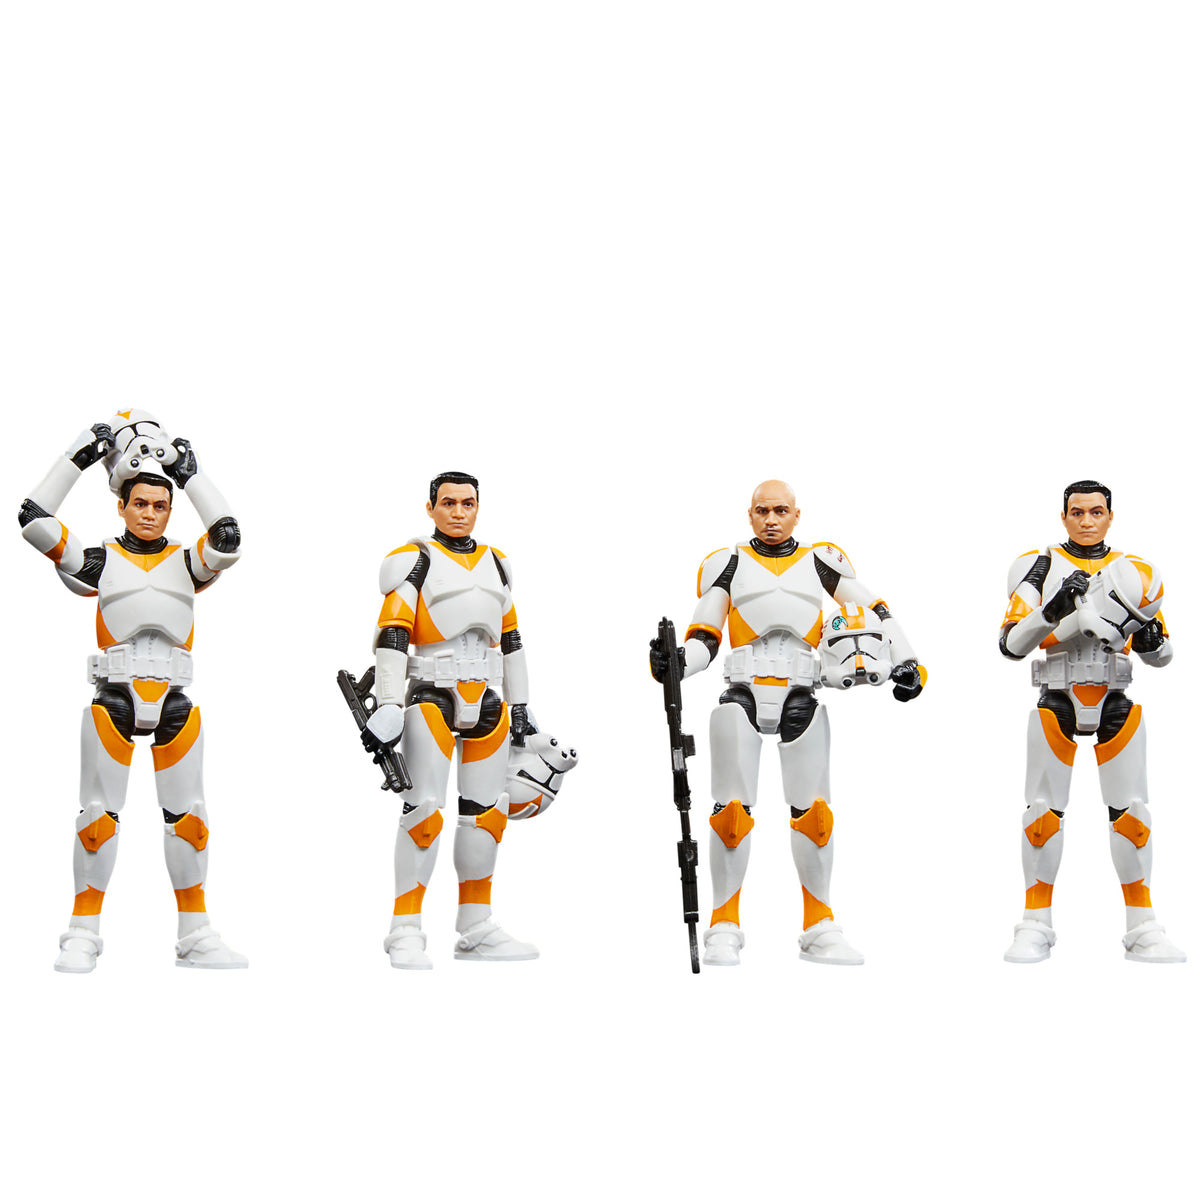 STAR WARS - Clone Trooper 212th - Figurine Black Series 15cm